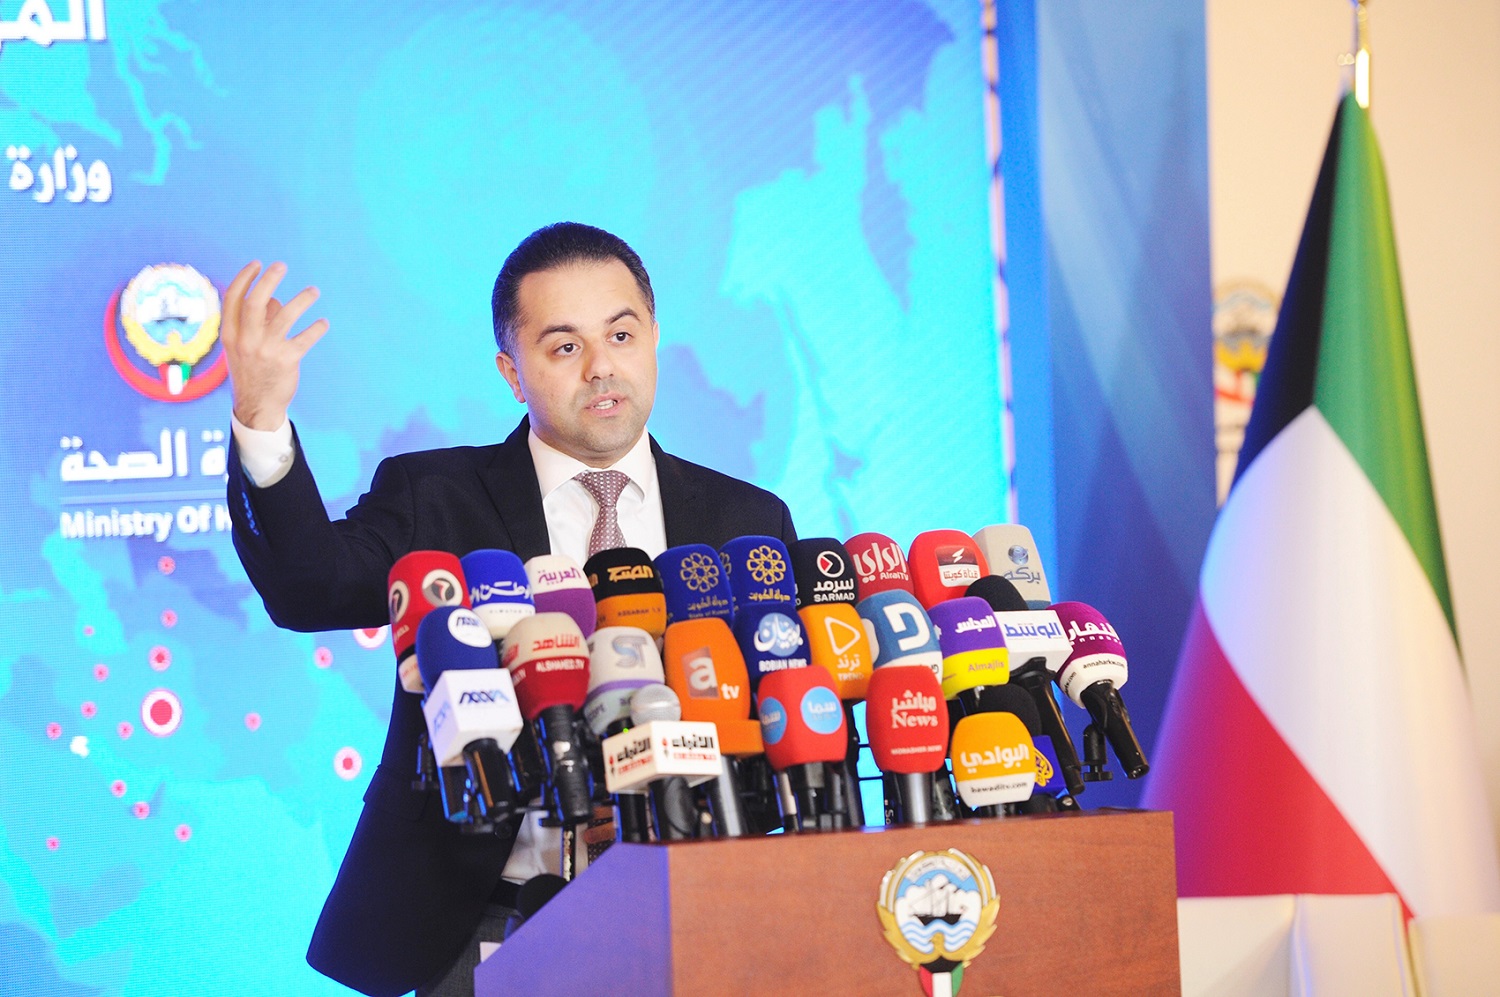 The ministry's spokesperson Dr. Abdullah Al-Sanad